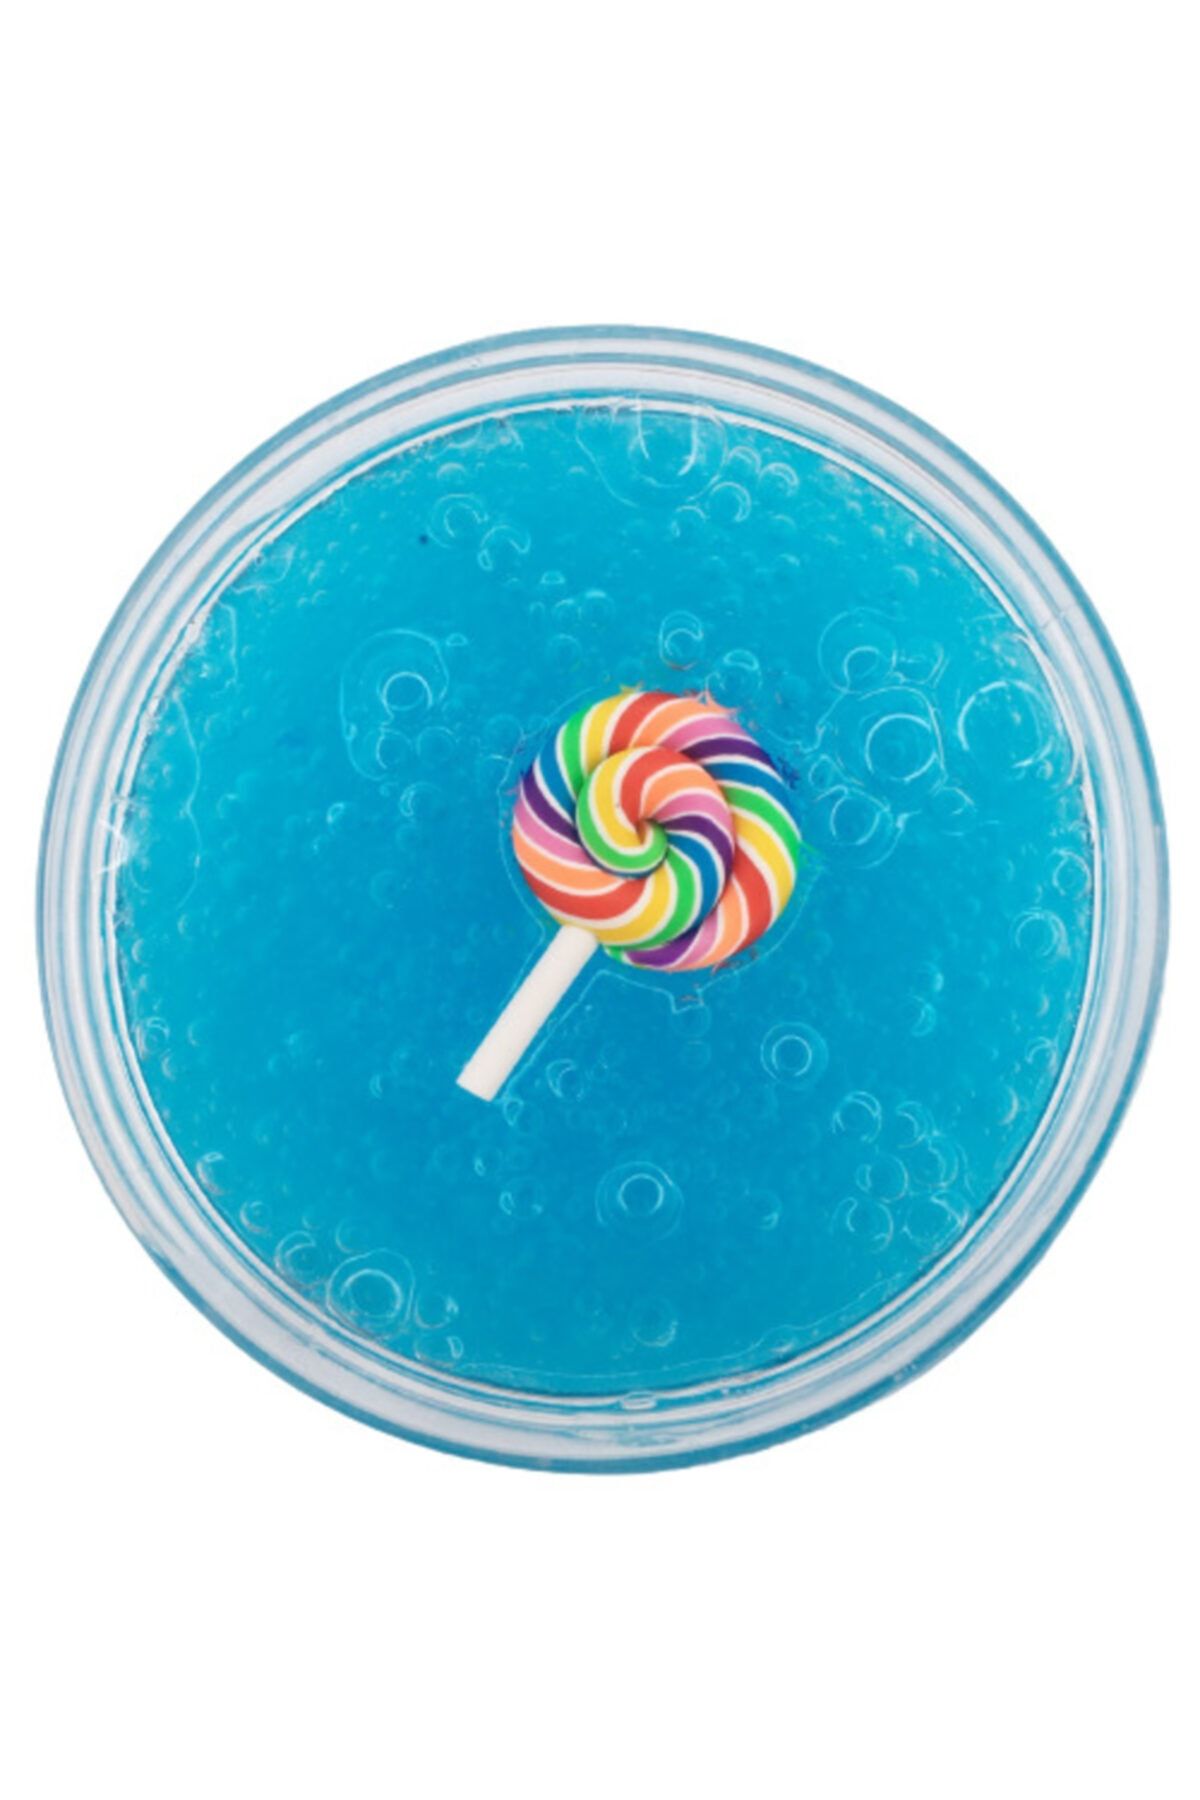 Slimewapi Jelly Belly Ocean Blue Rainbow Slime Seti - 200 ml